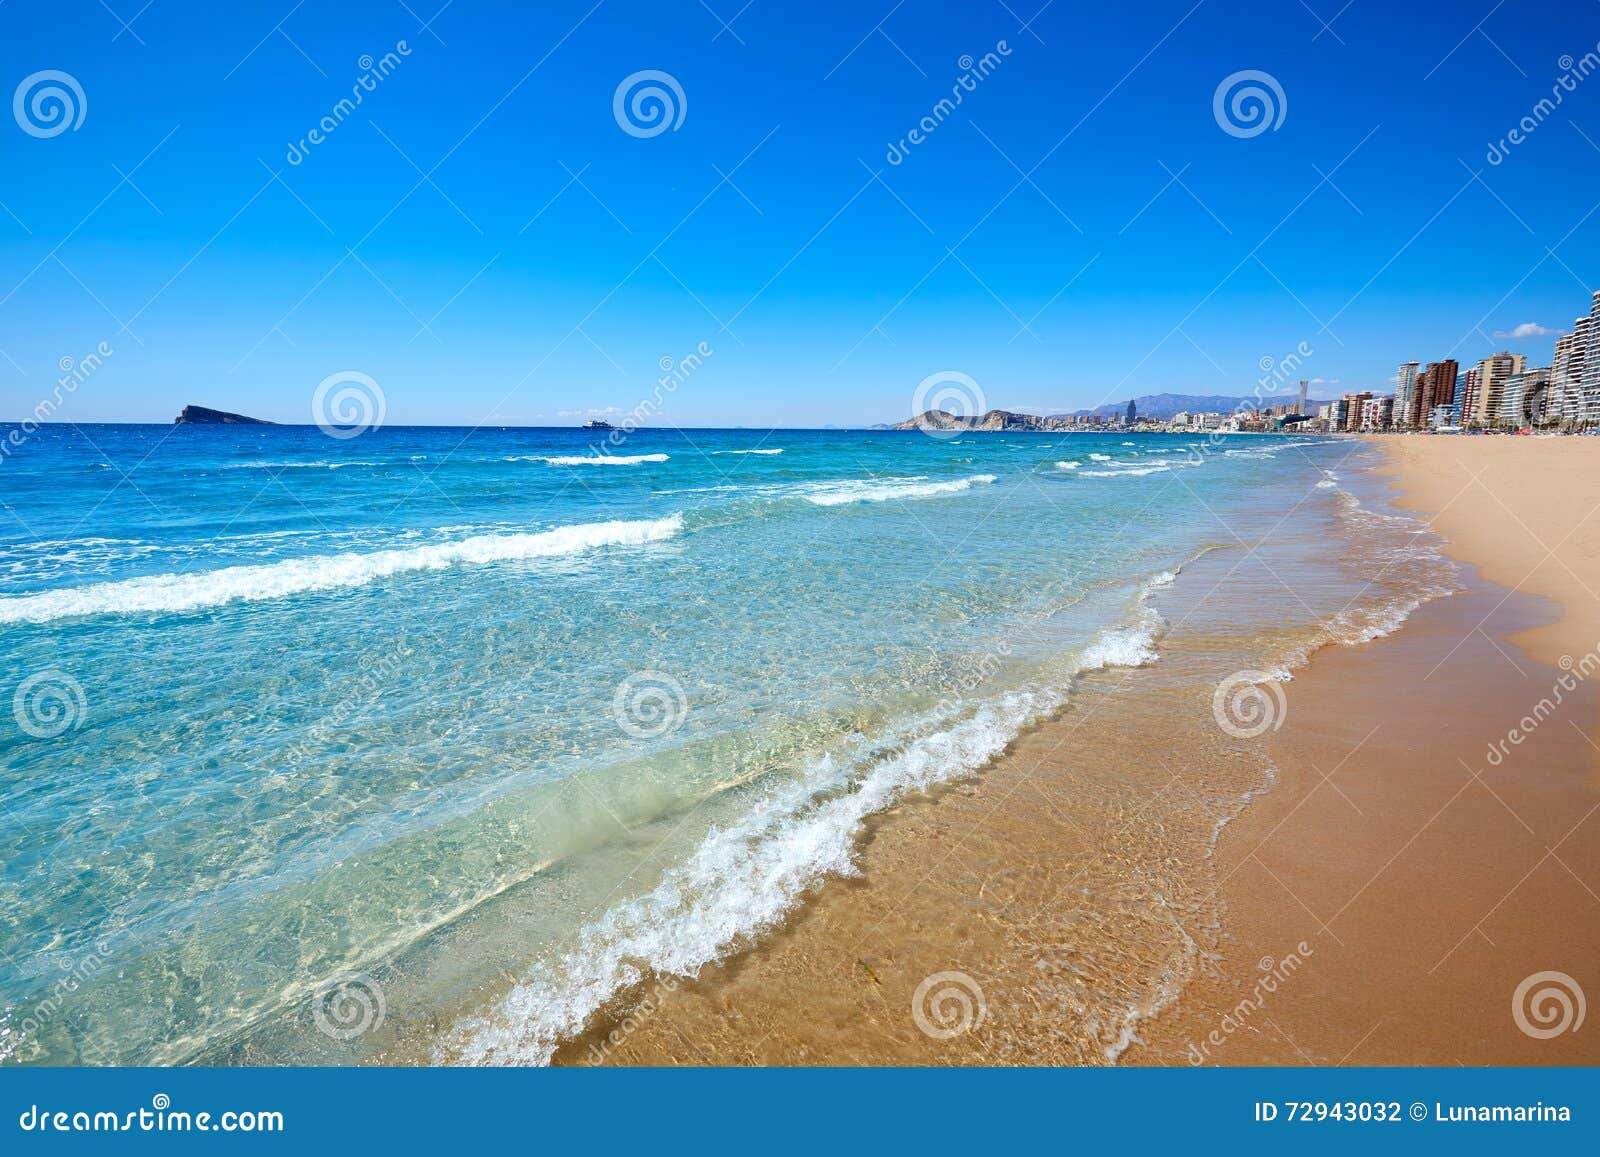 benidorm levante beach in alicante spain